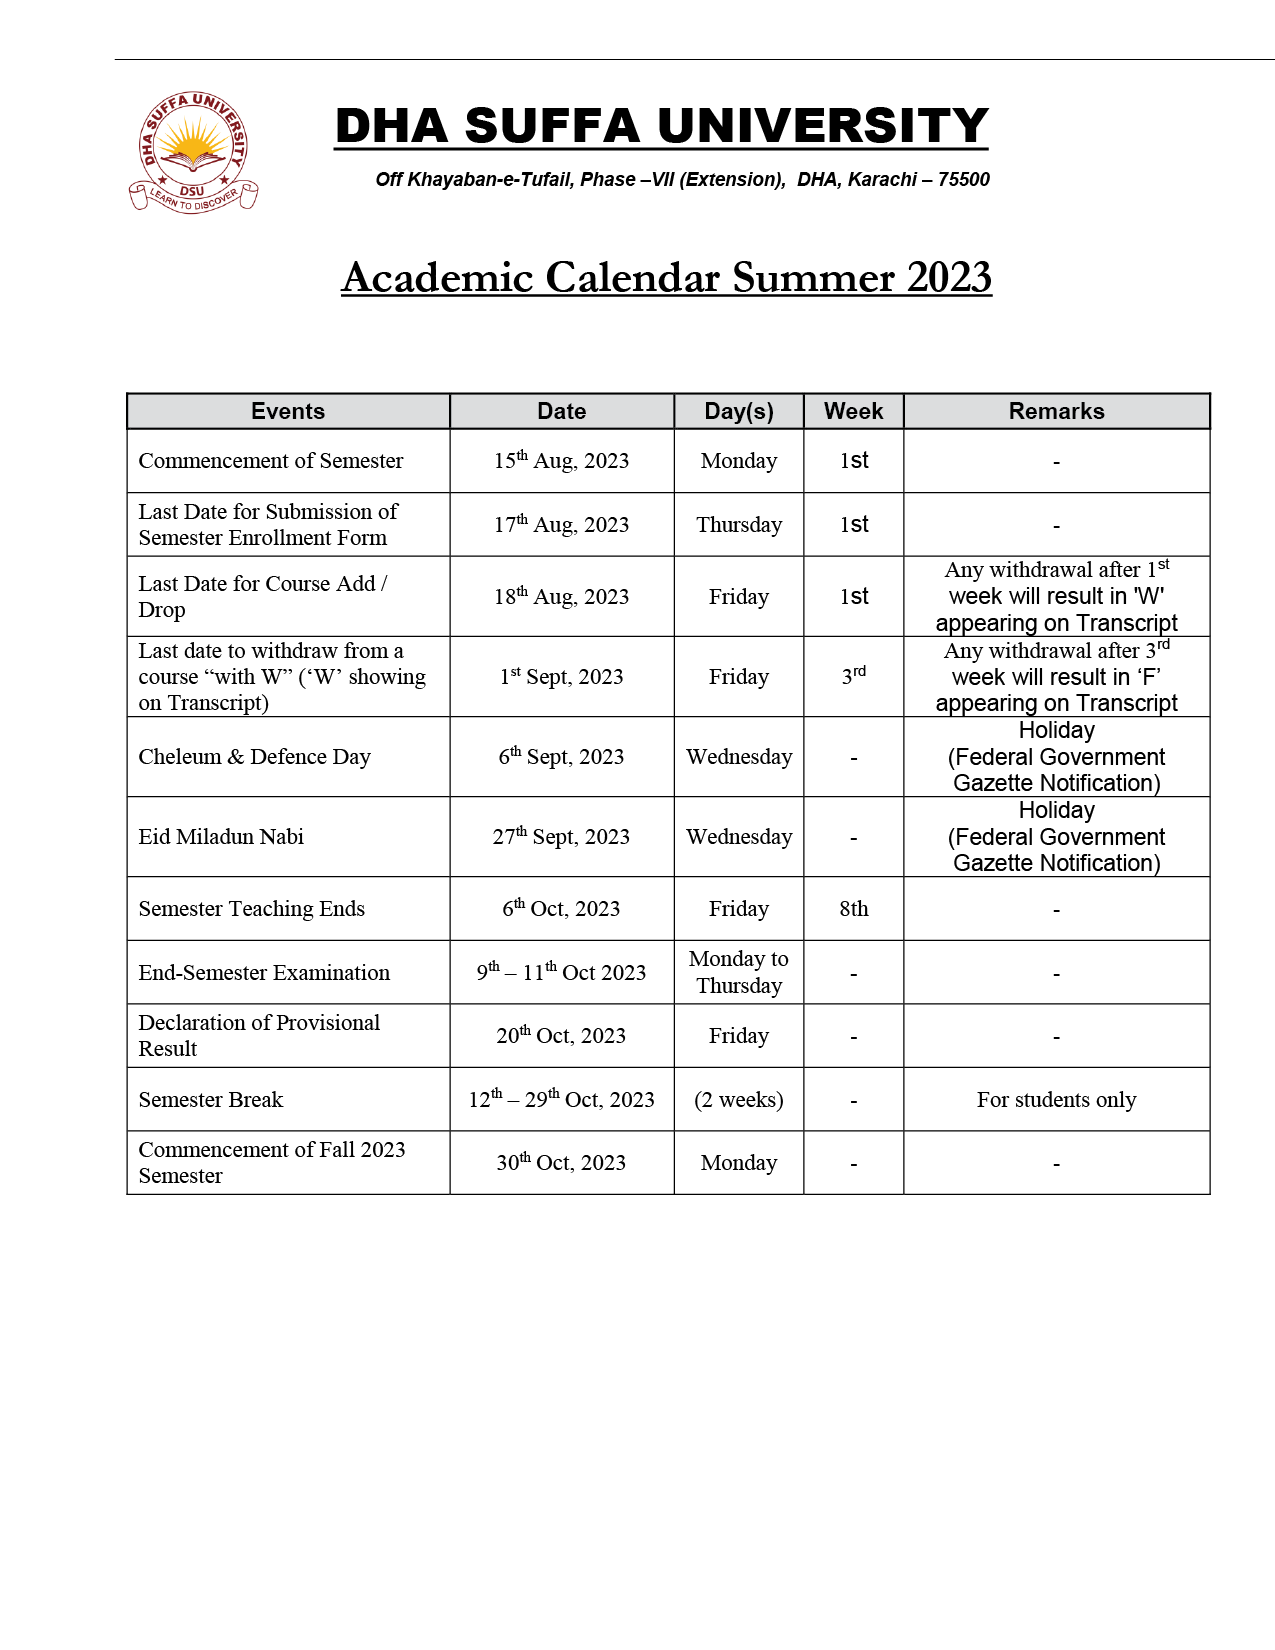 Academic Calendar DHA Suffa University